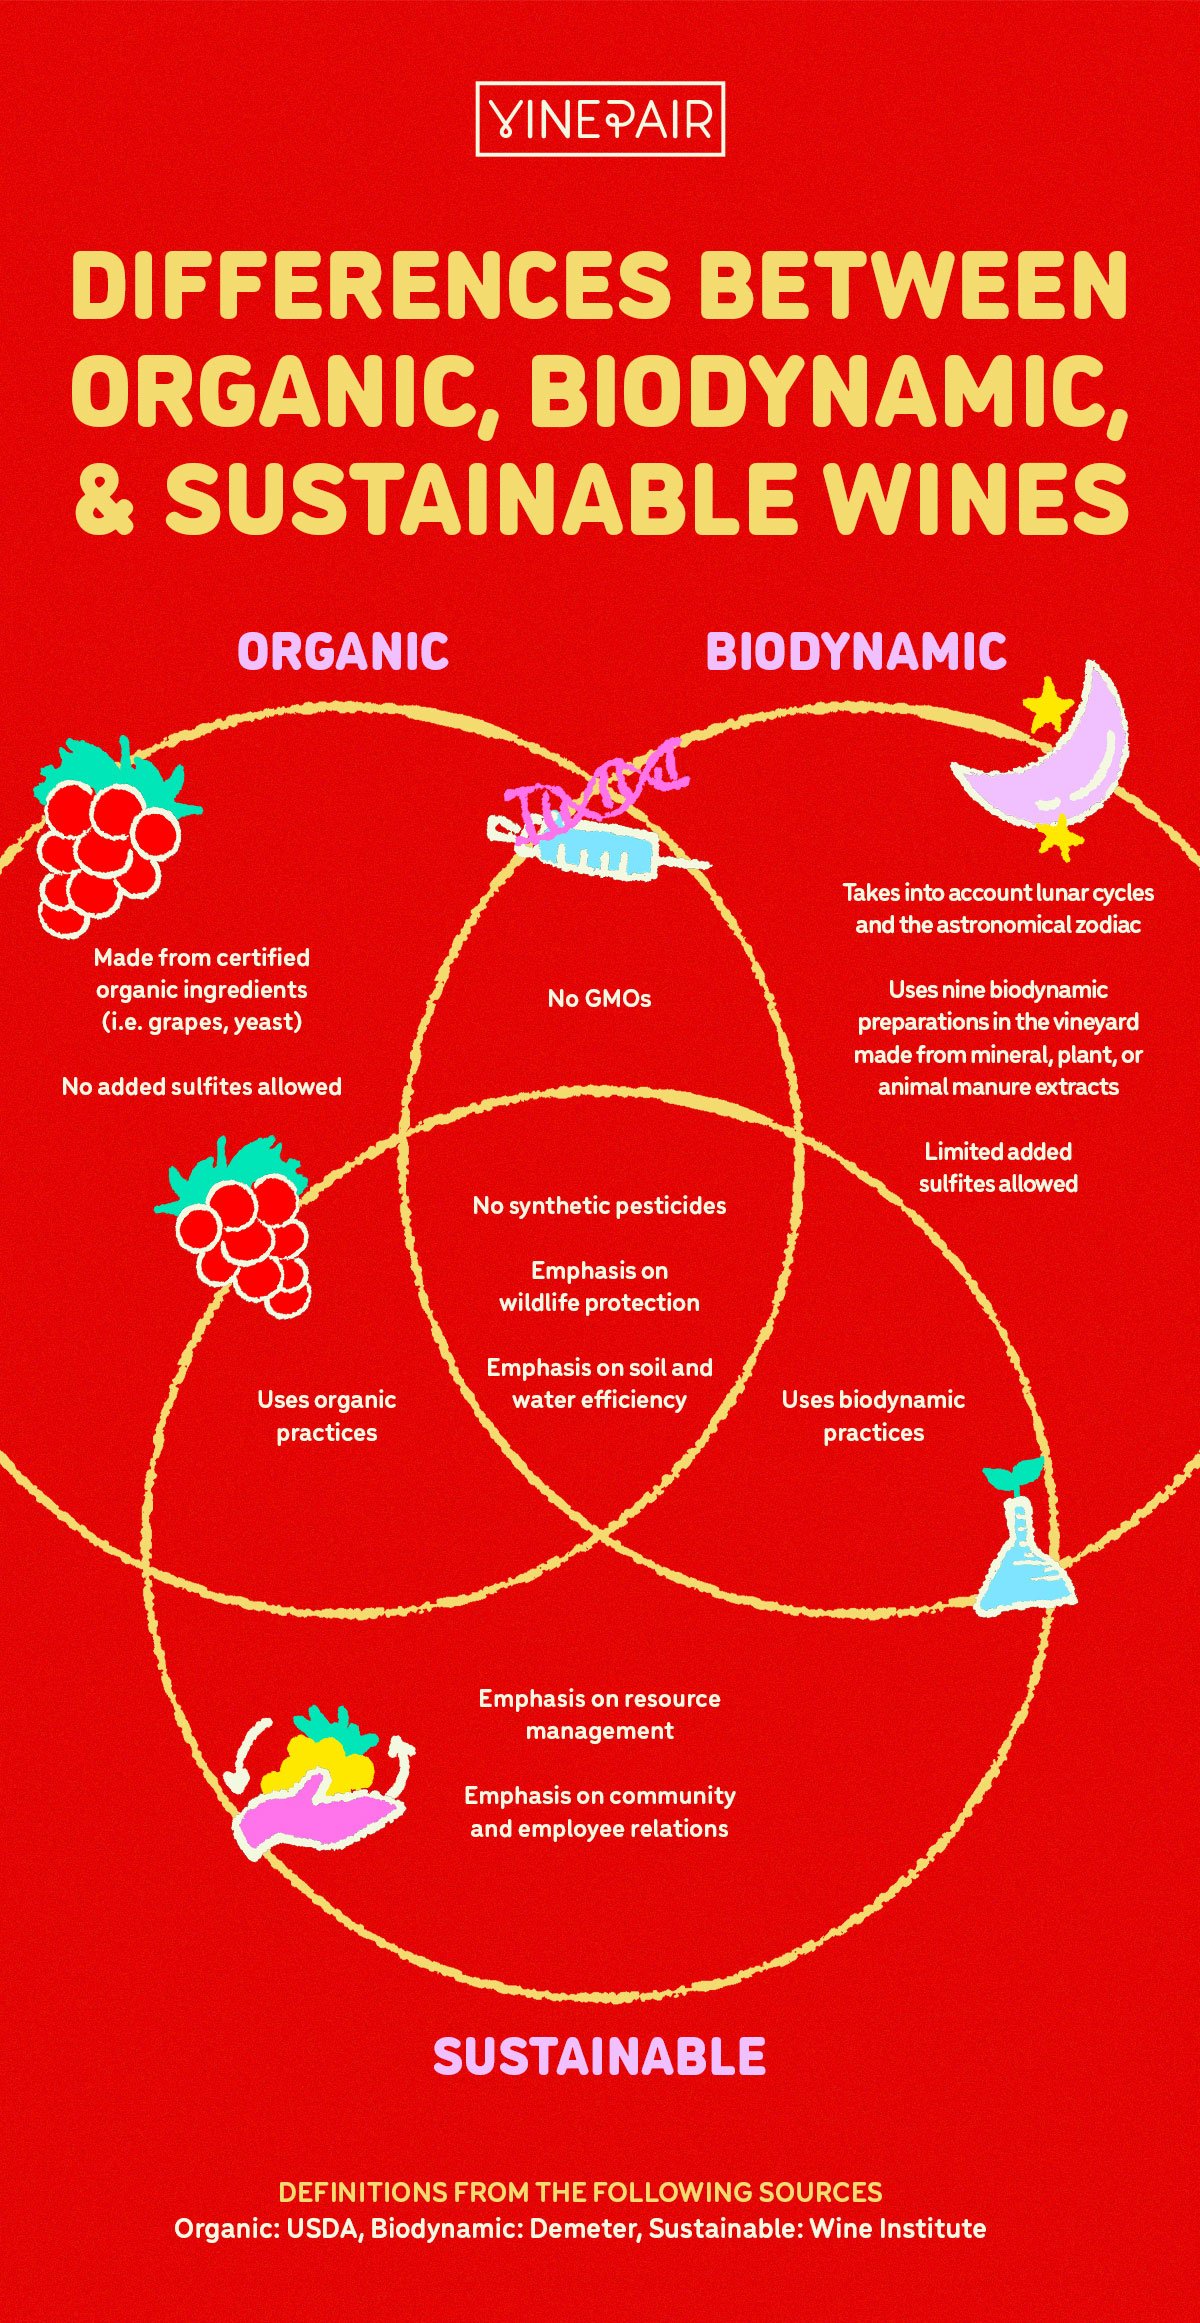 Differences between organic, biodynamic & sustainable wineshttps://www.camdouglasms.com/journal/2022/5/10/differences-between-organic-biodynamic-and-sustainable-wines